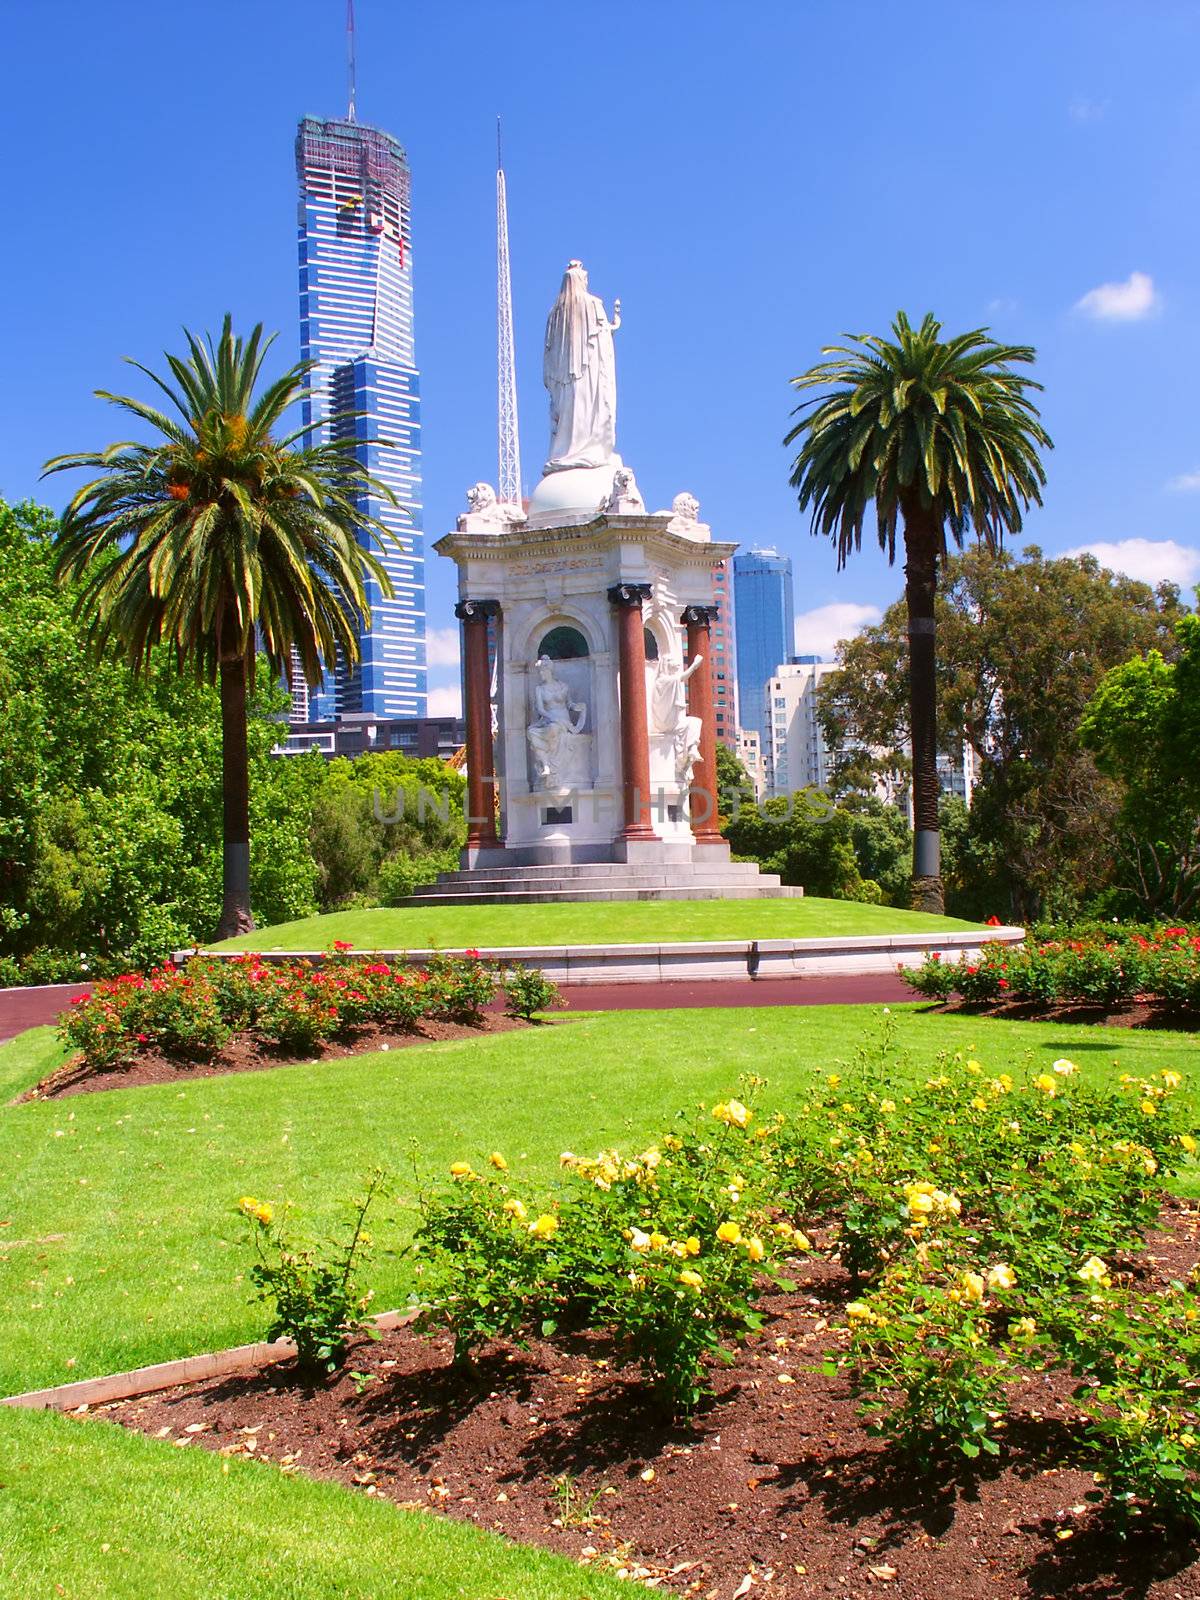 Melbourne, Australia - November 14, 2005: The Queen Victoria Memorial has been a landmark of Melbourne Australia since 1907.